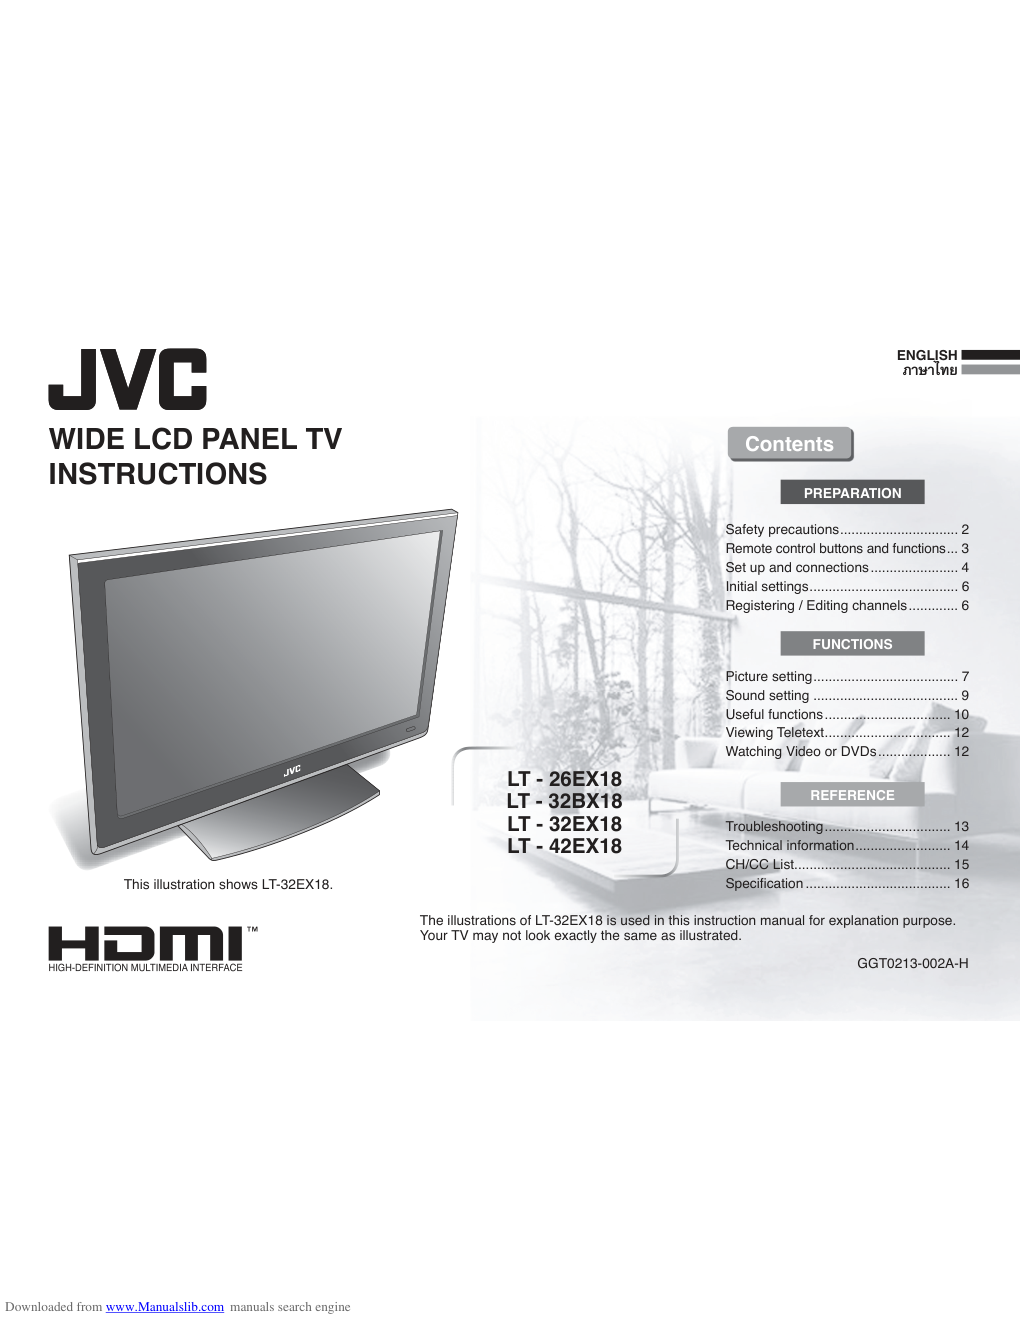 JVC胜利LT-42EX18液晶电视使用手册-0